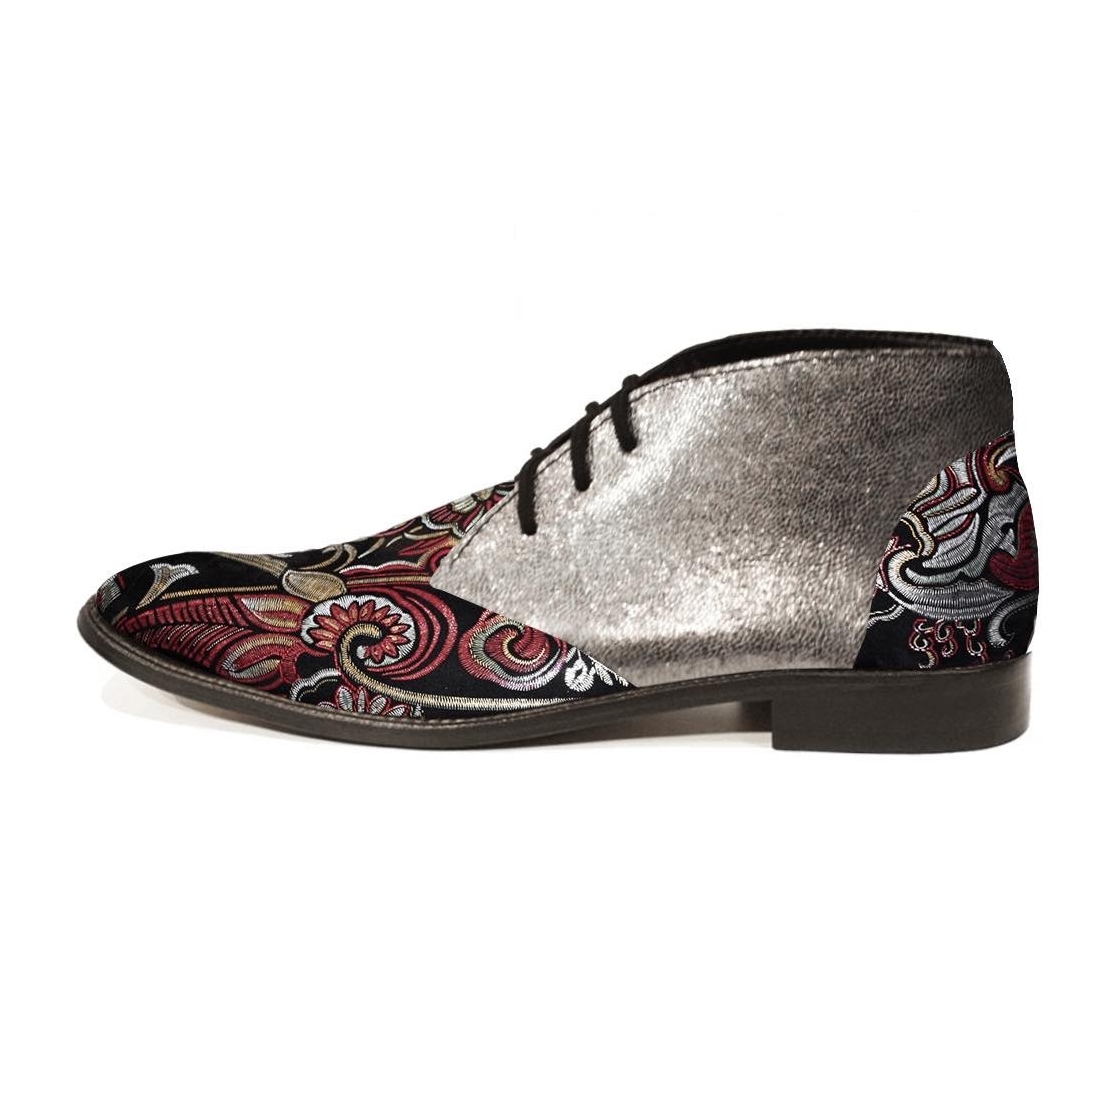 Modello Argentello - Chukka Boots - Handmade Colorful Italian Leather Shoes